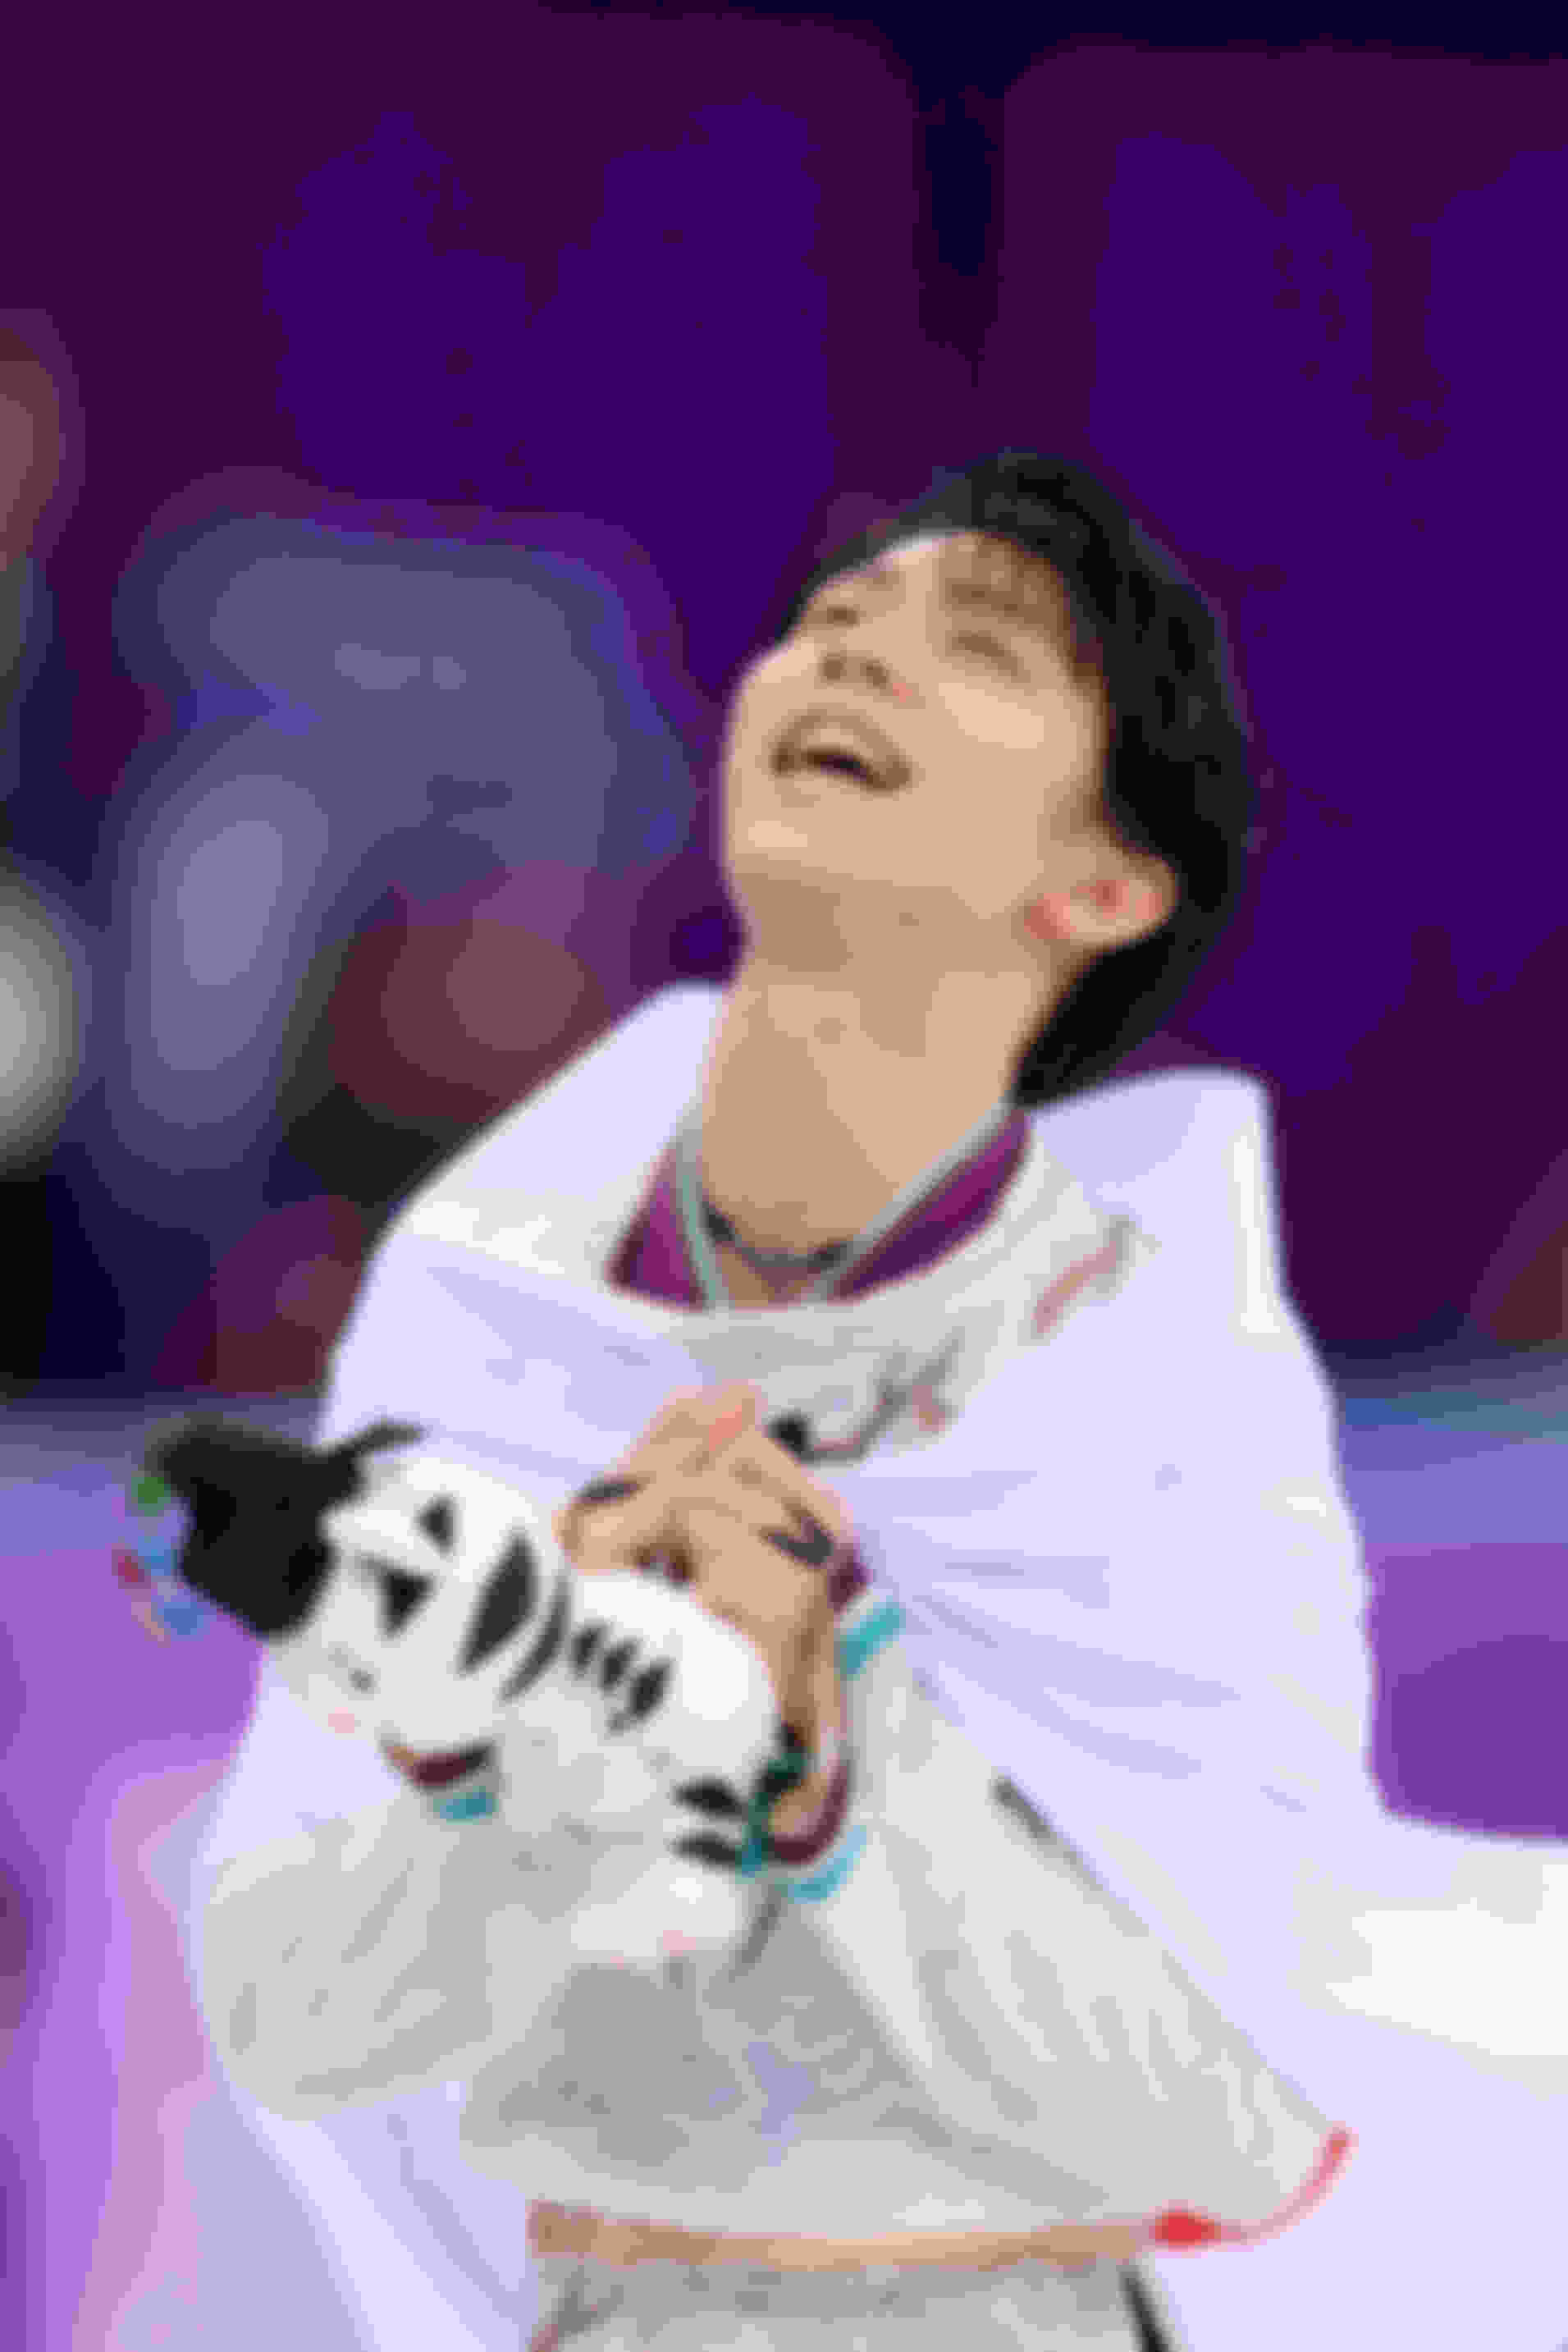 Yuzuru Hanyu's joy at PyeongChang 2018